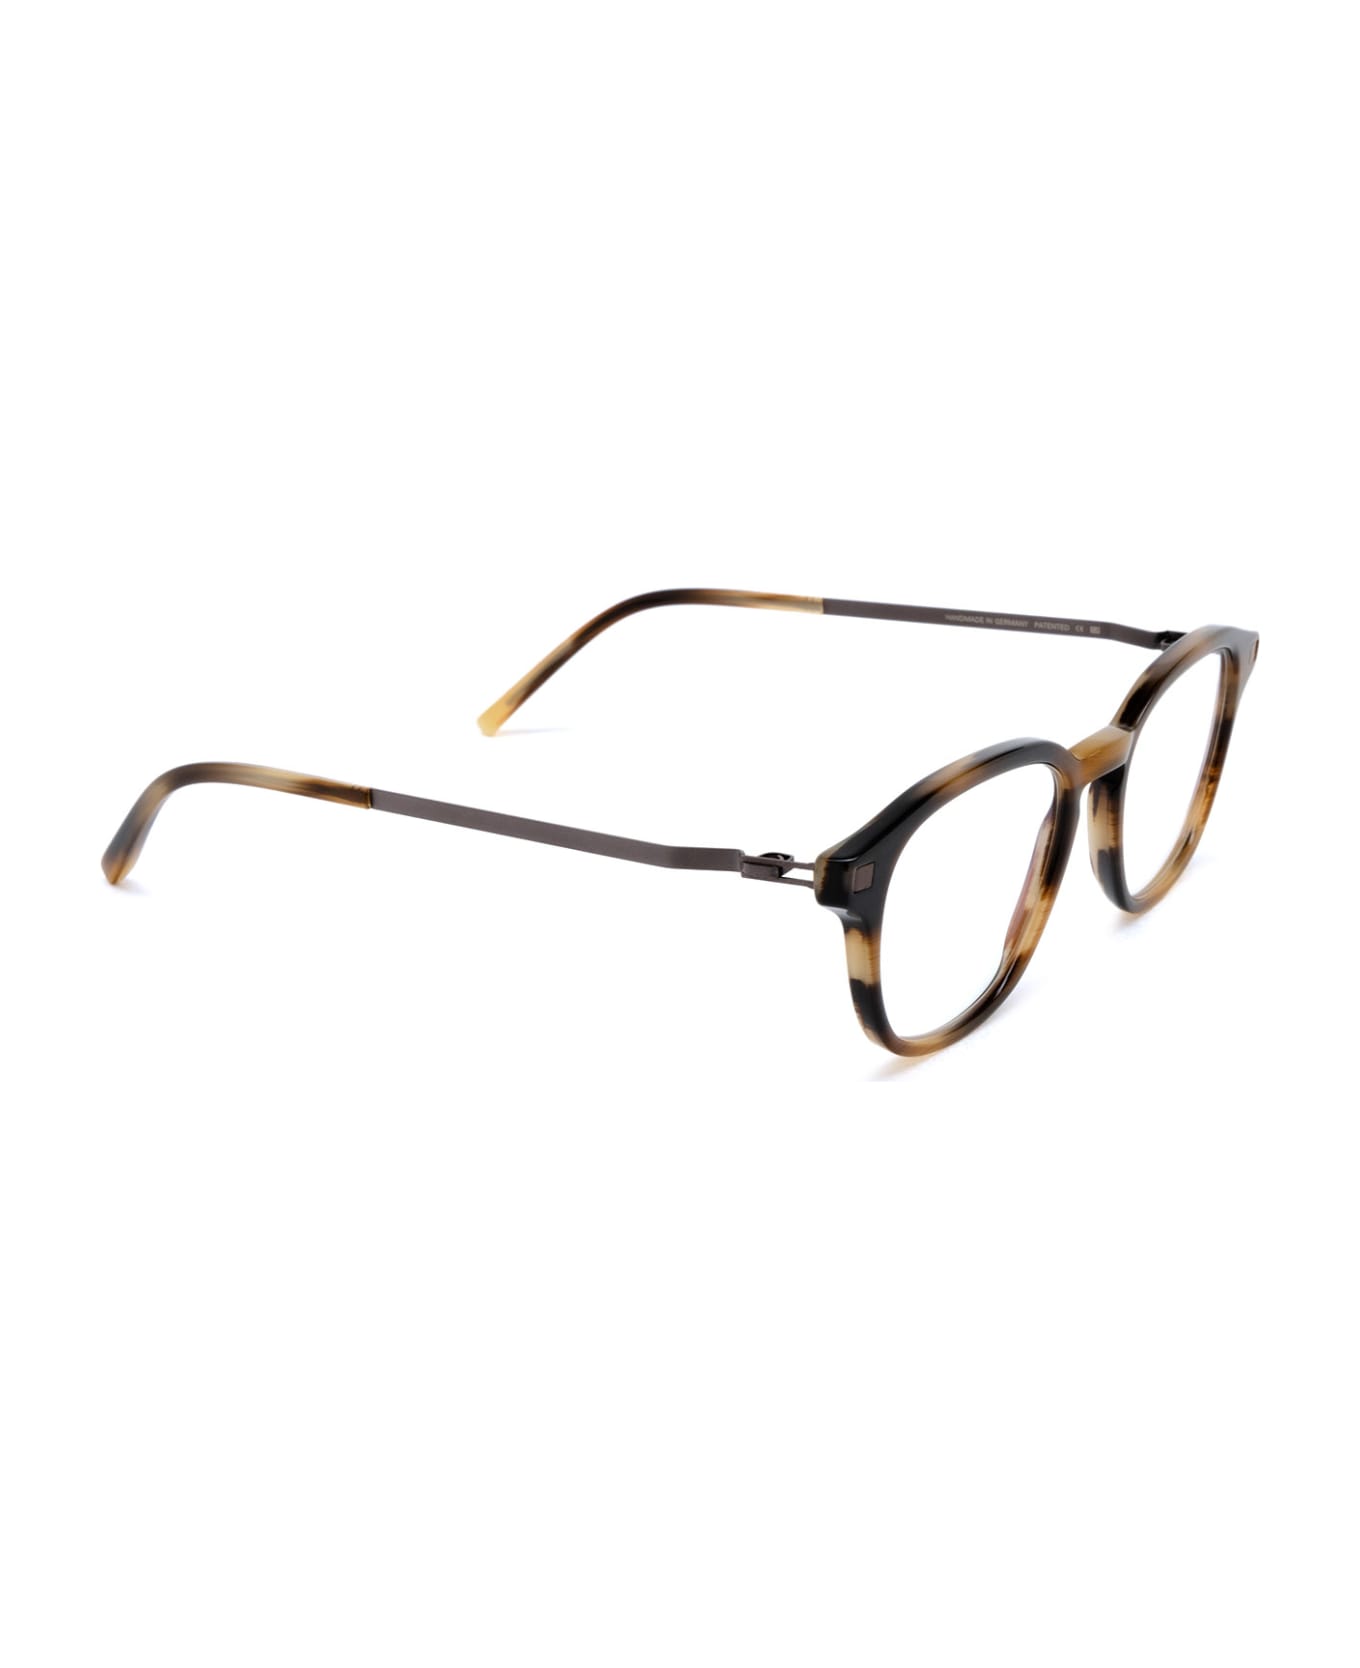 Mykita Yura C175 Striped Brown/mocca Glasses - C175 Striped Brown/Mocca アイウェア